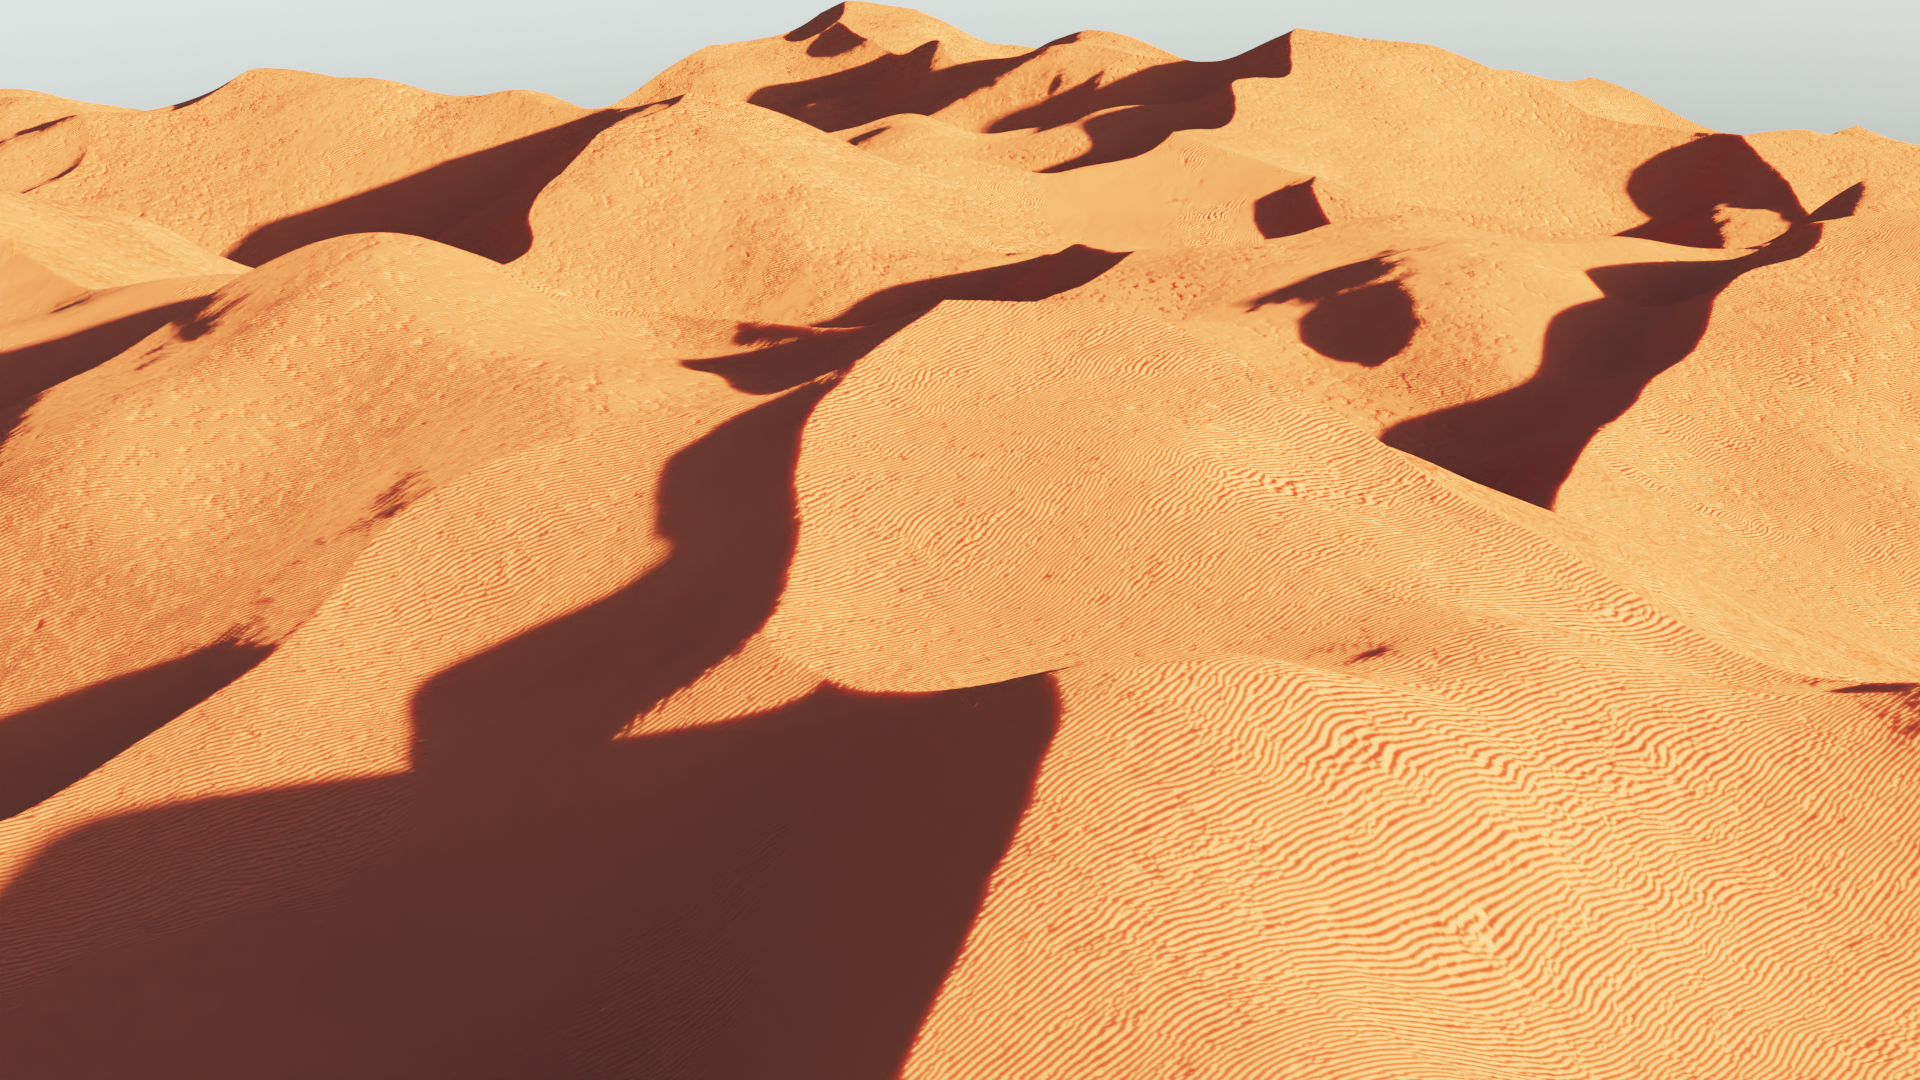 Procedural Desert / Dunes preview image 1